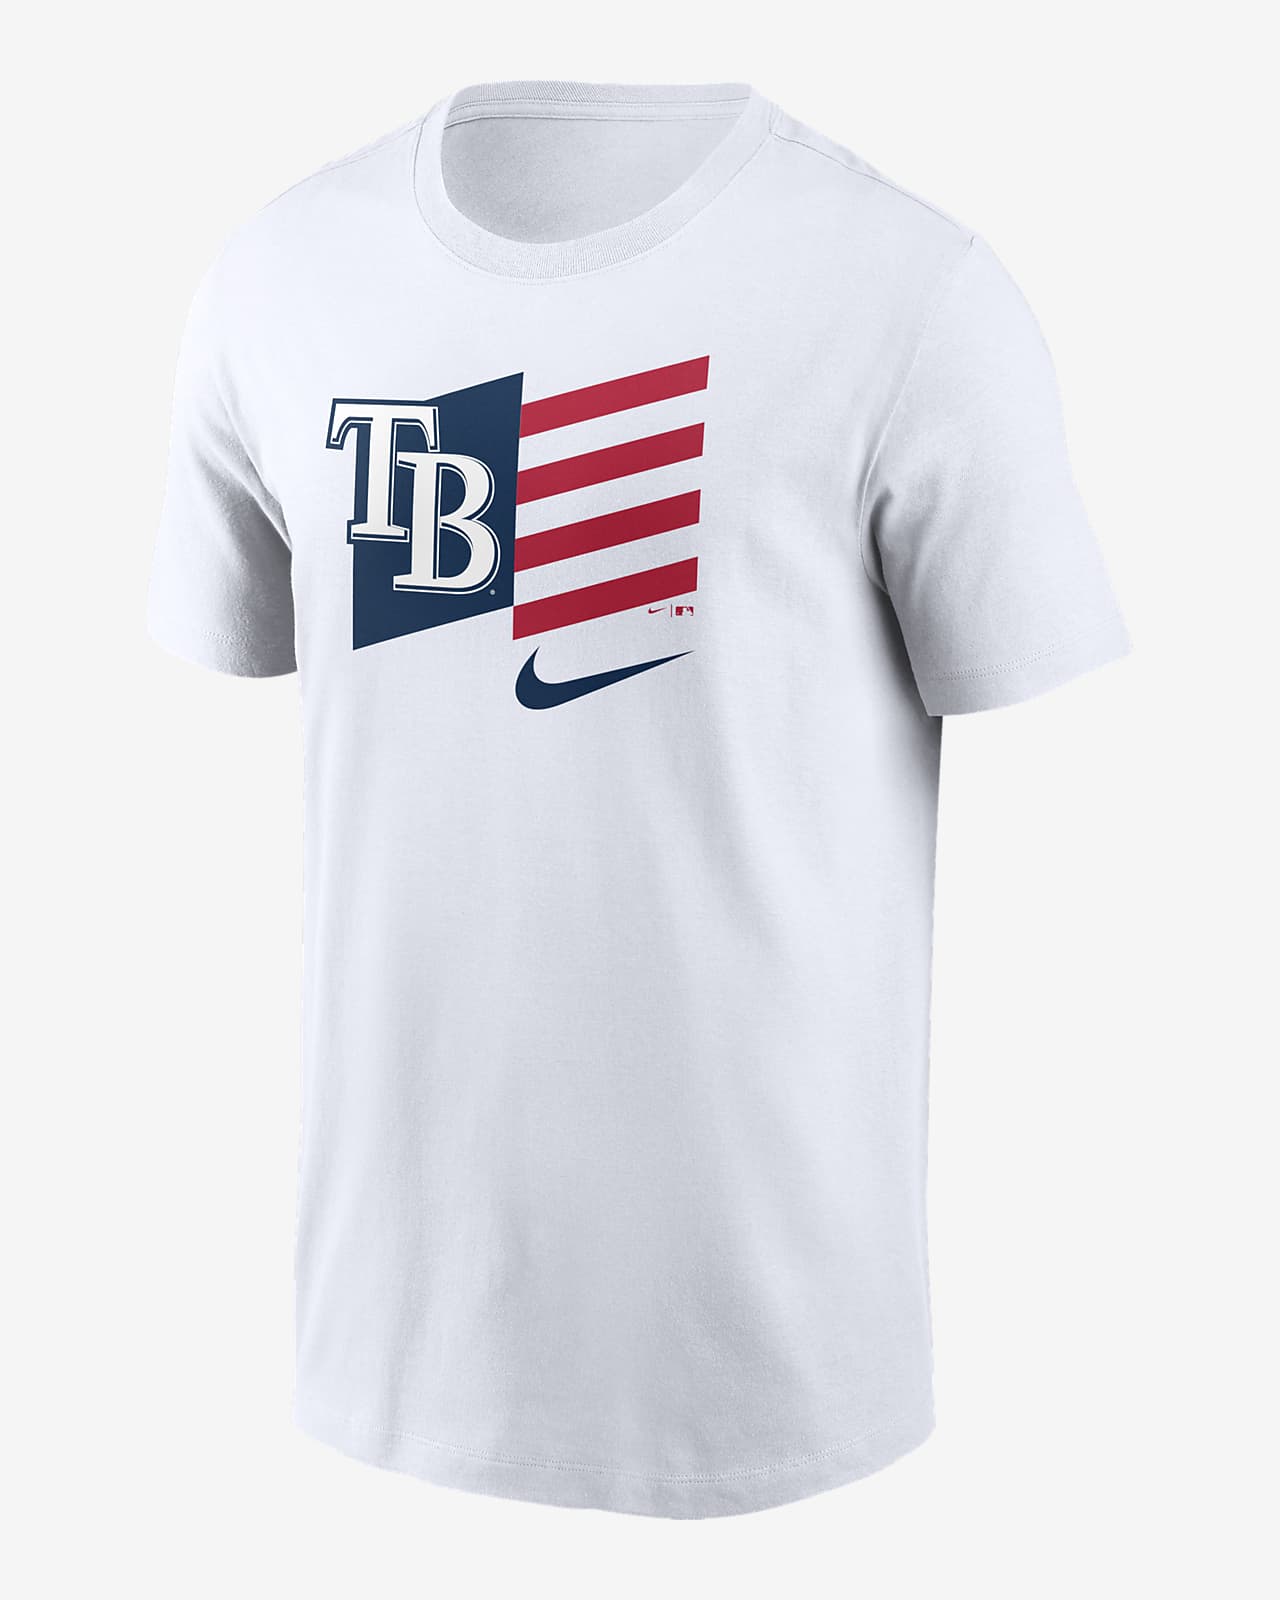 Tampa Bay Rays American Flag Shirt Rays Fan Shirt Rays Shirt